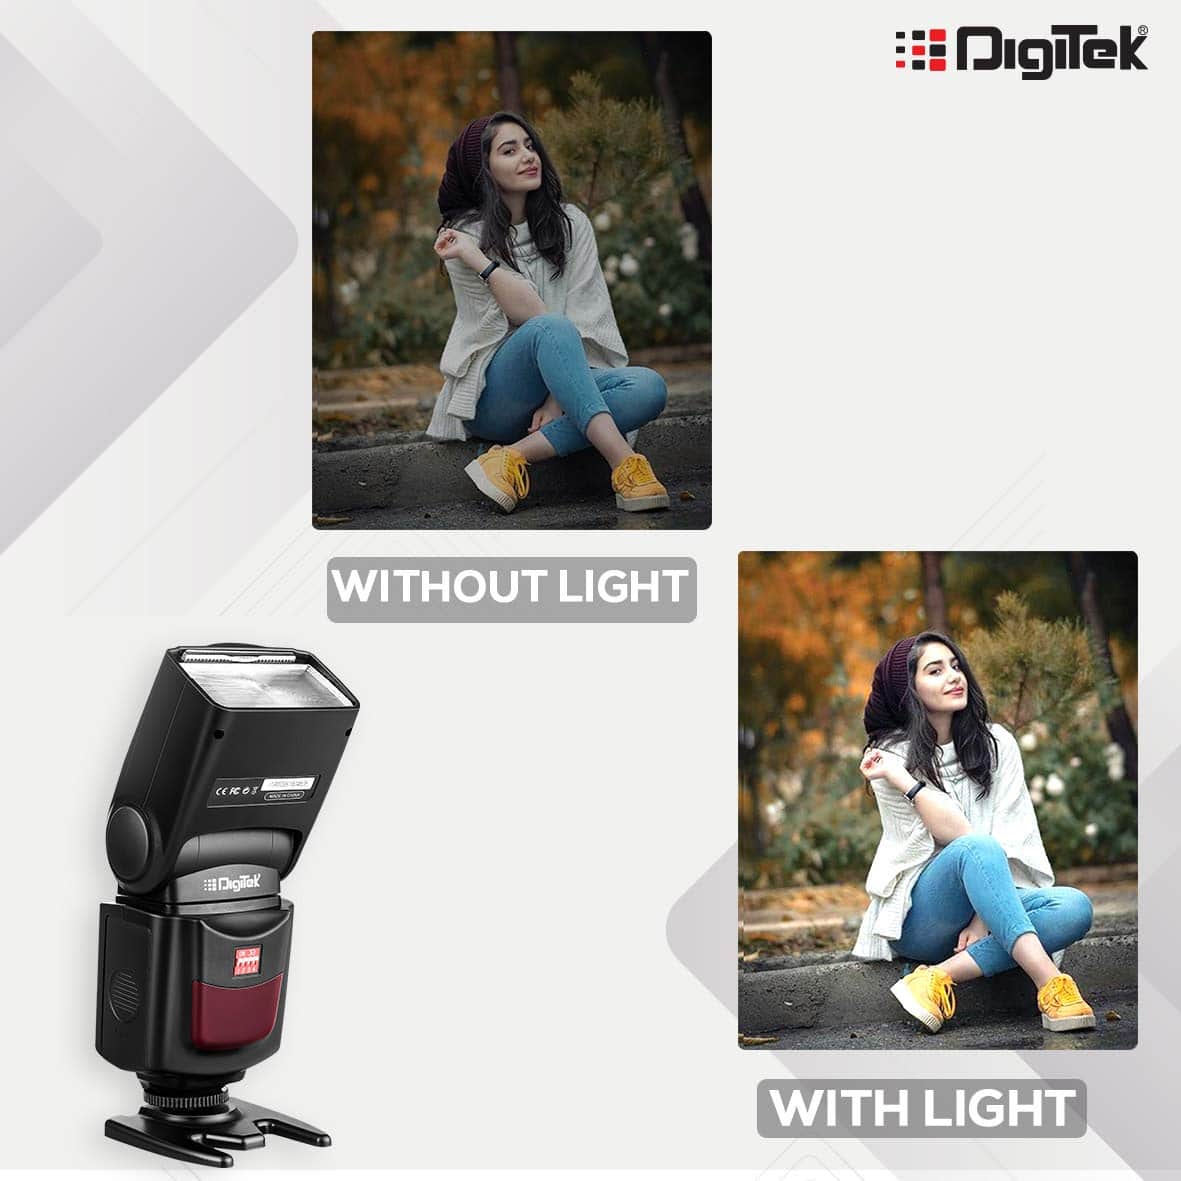 Universal-Electronic-Flash-Speedlite-for-DSLR-Cameras-Canon-Nikon-Pentax-Olympus-with-Standard-Hot-Shoe-Mount